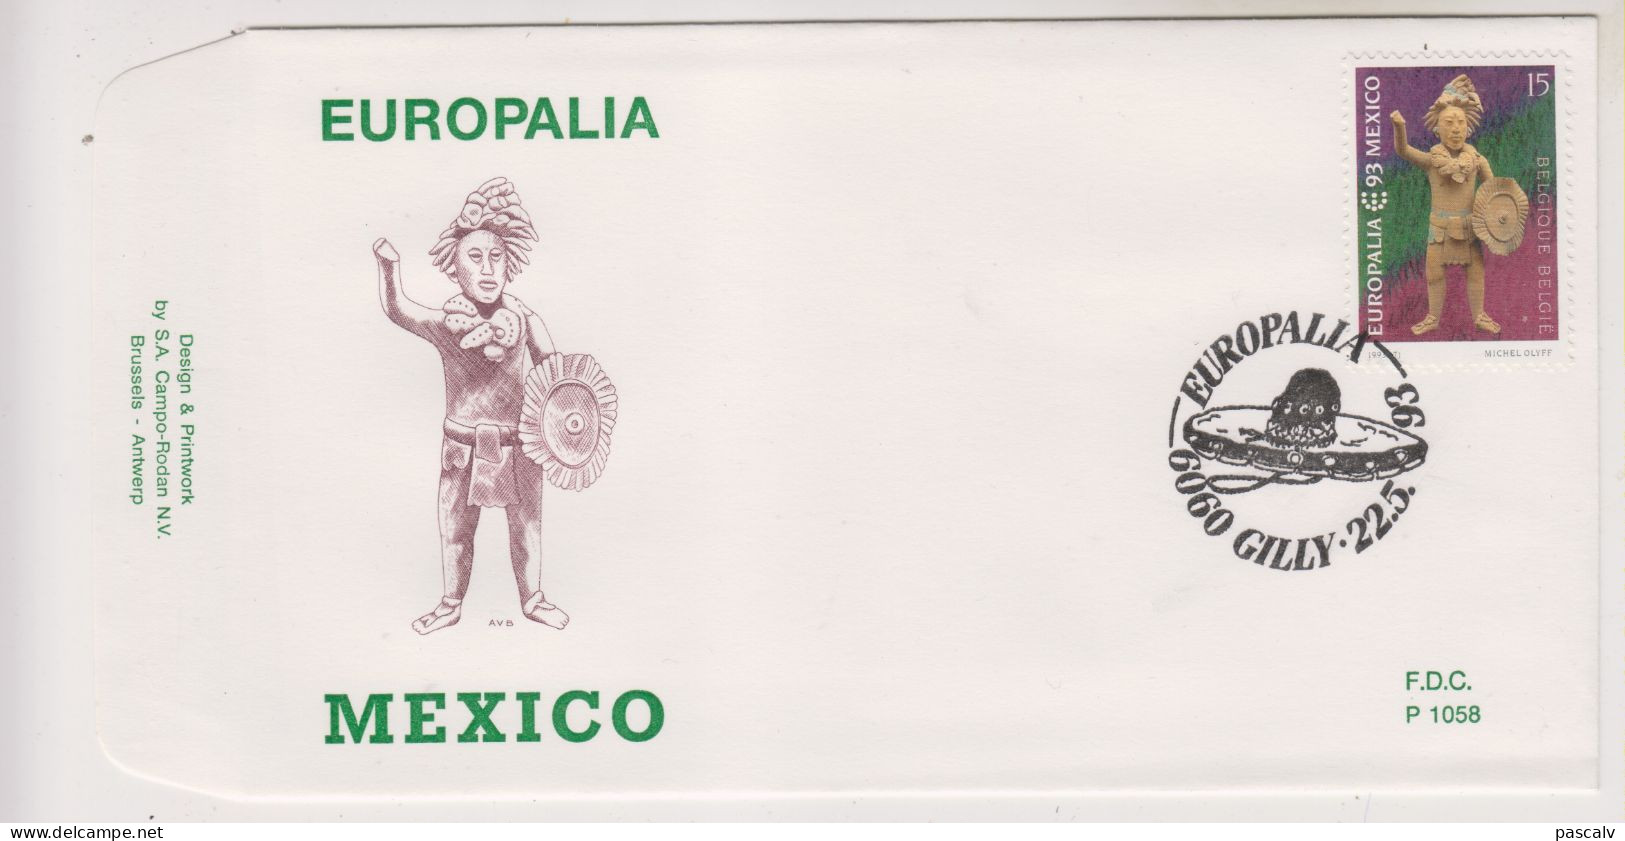 FDC 1058 COB 2508 Europalia Mexico Oblitération Gilly - 1991-2000